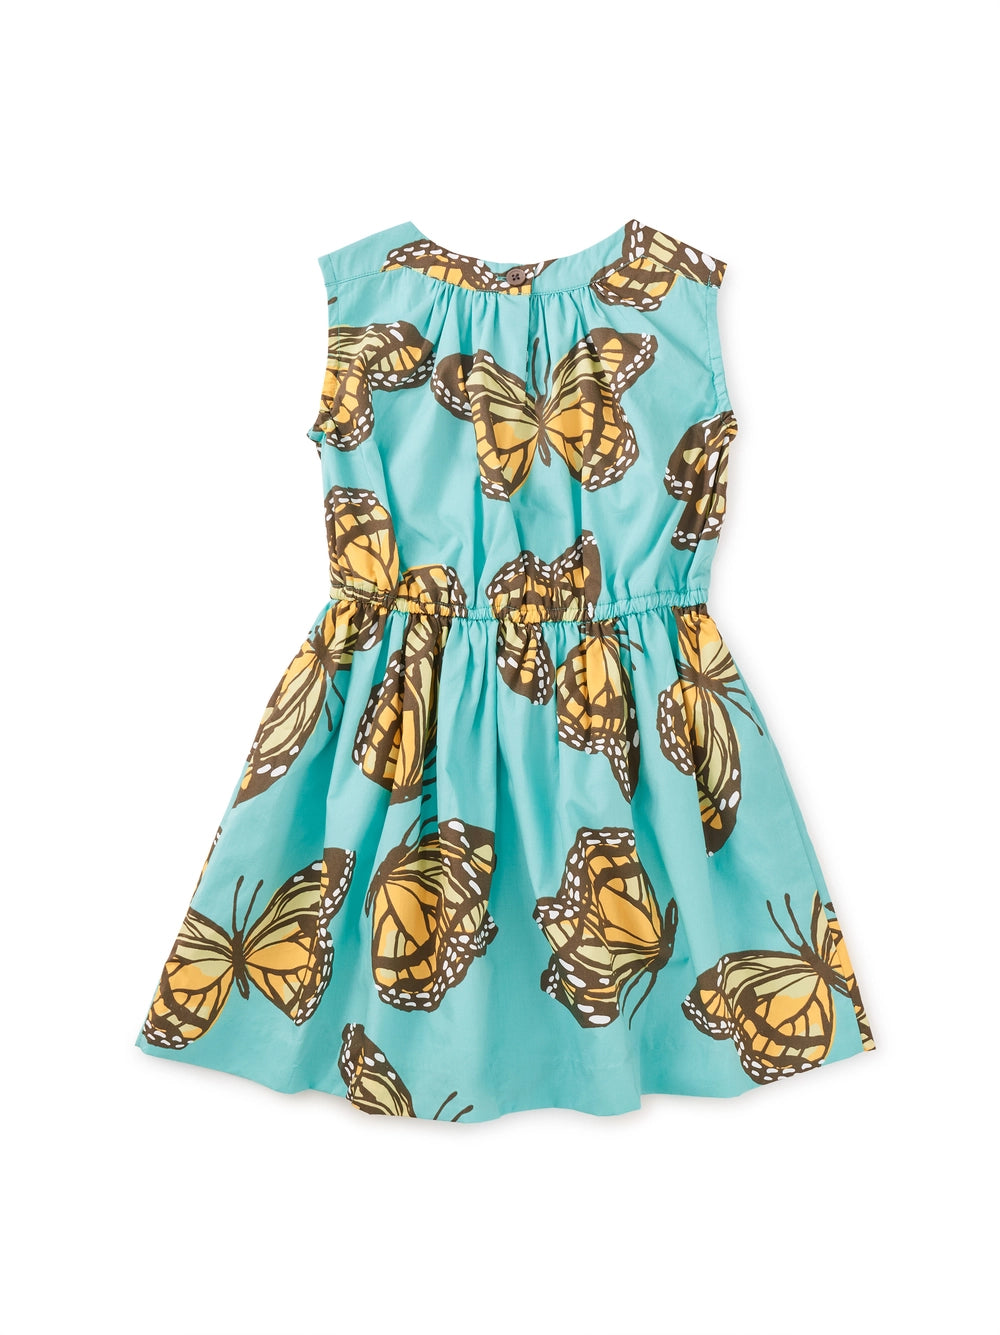 Sleeveless Skirted Dress - Monarch Migration